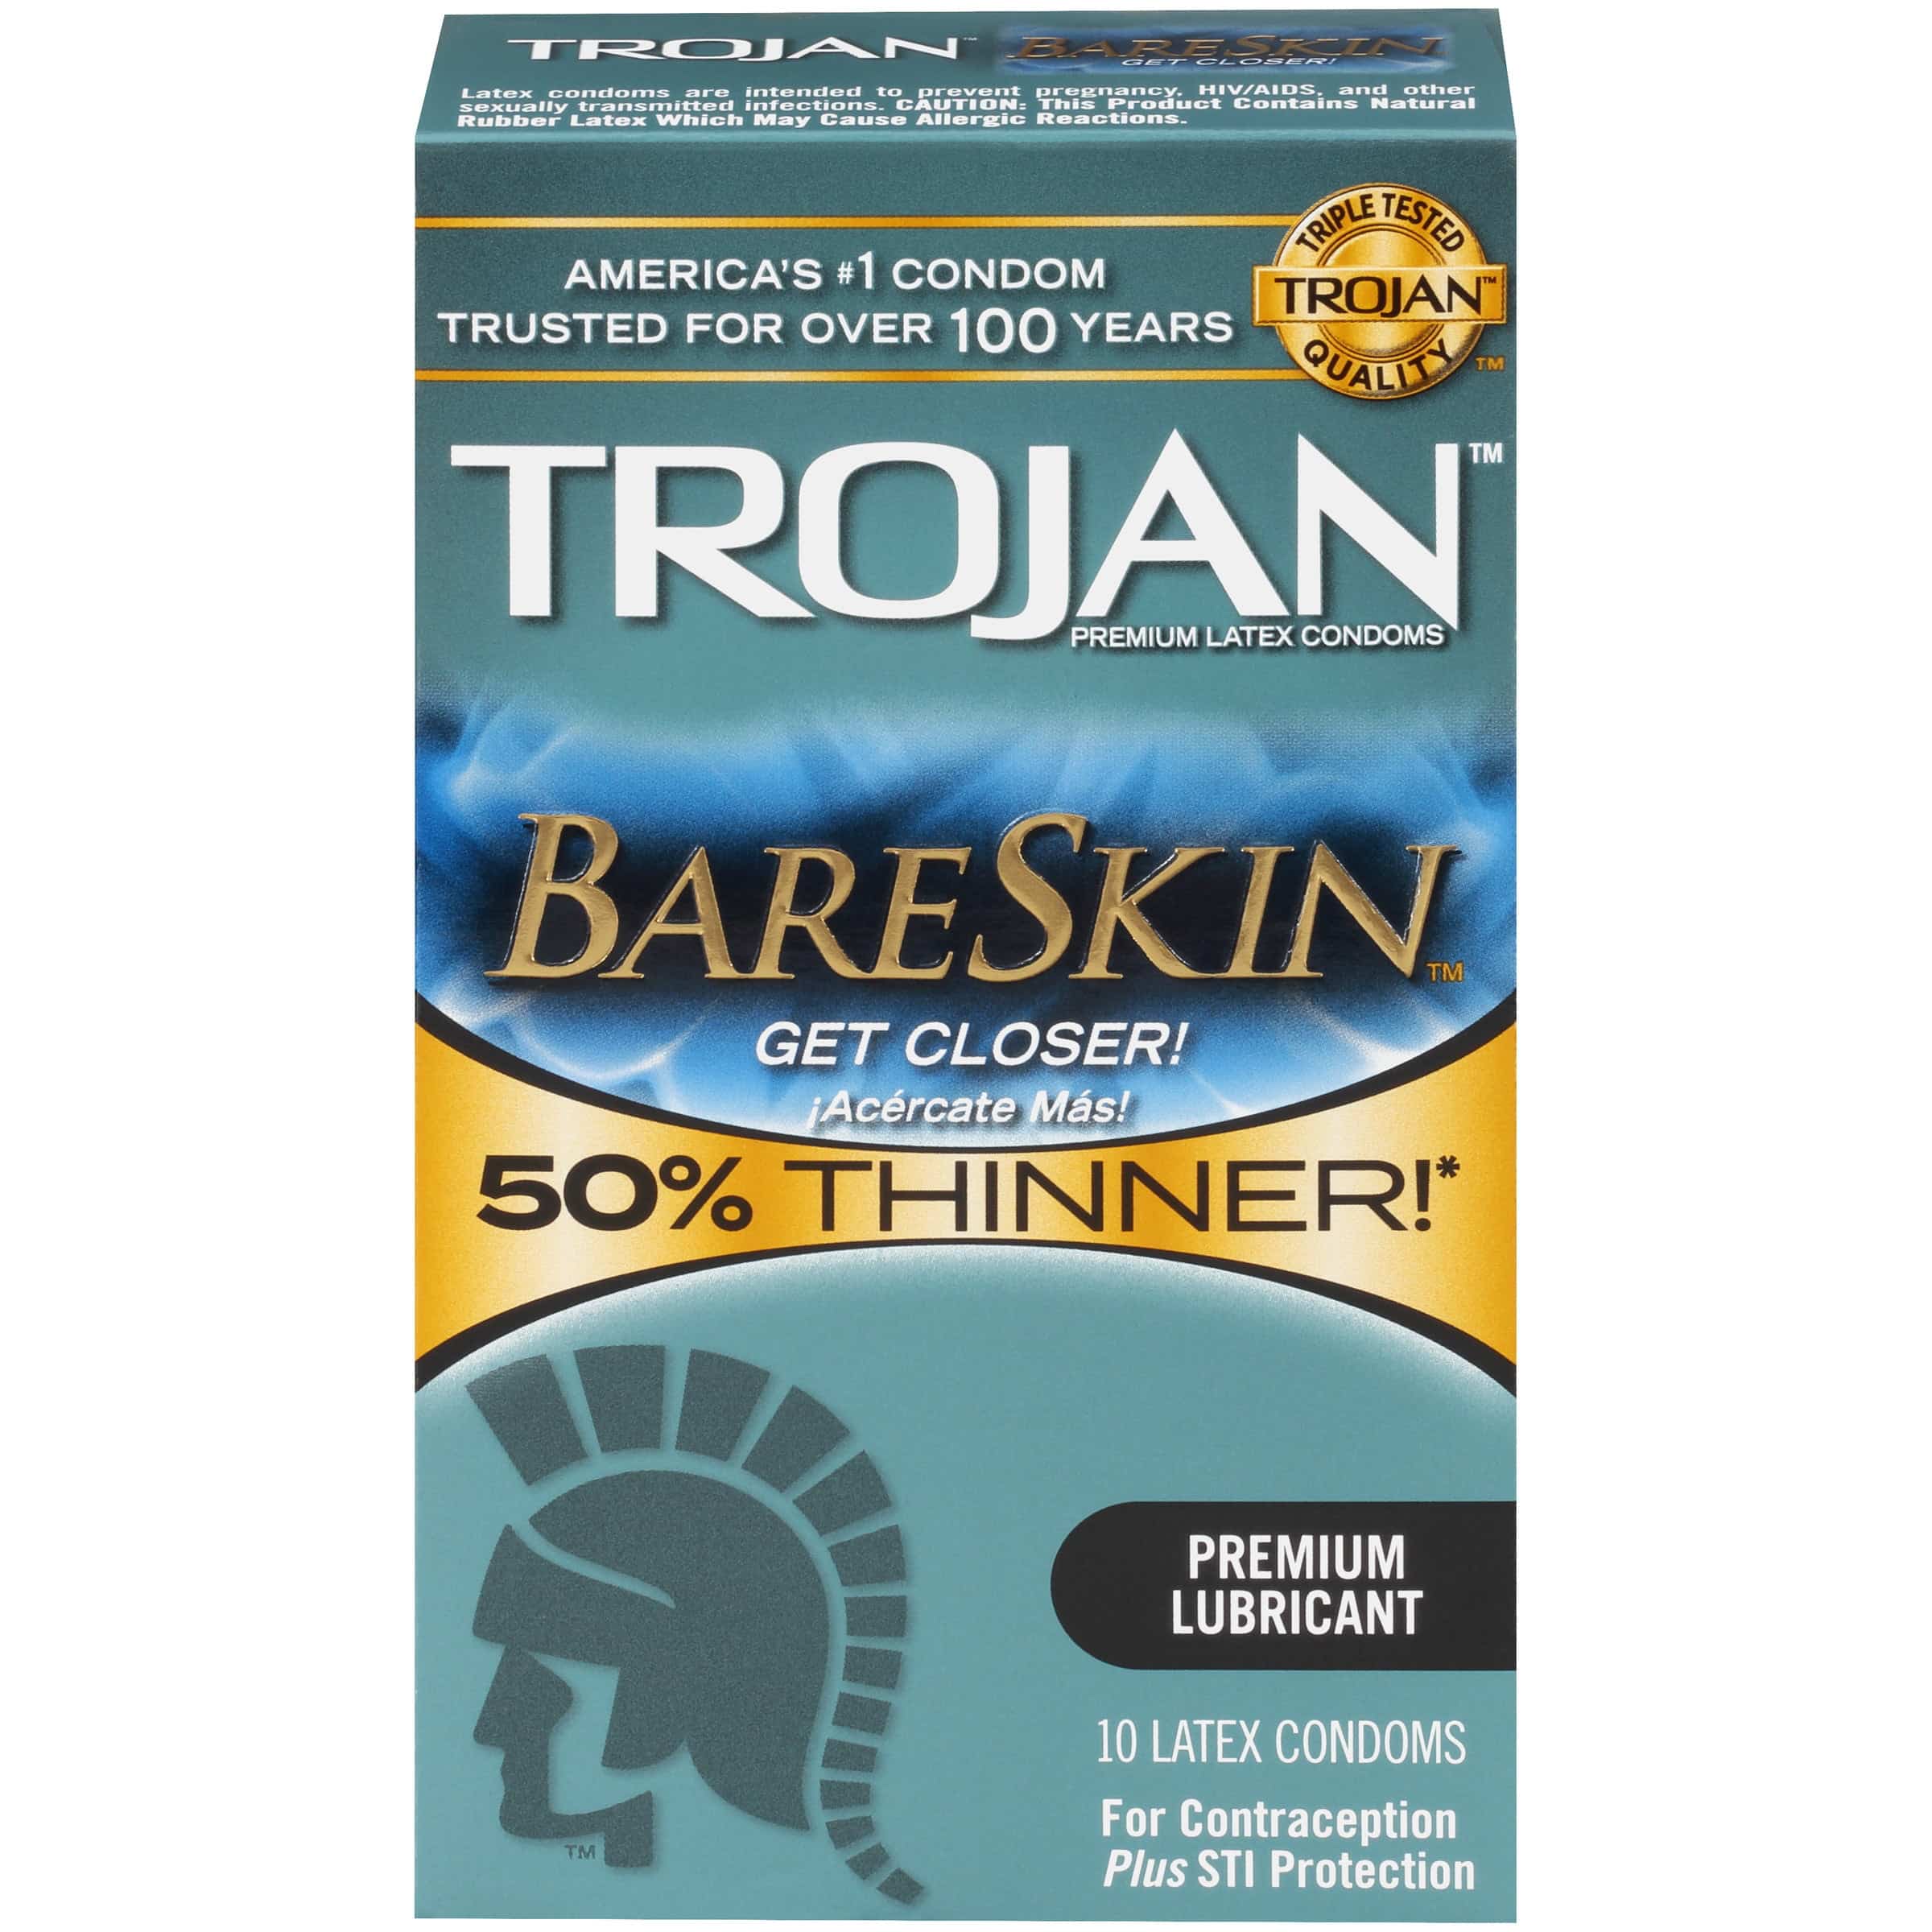 Trojan Bareskin Premium Thin Lubricated Condoms